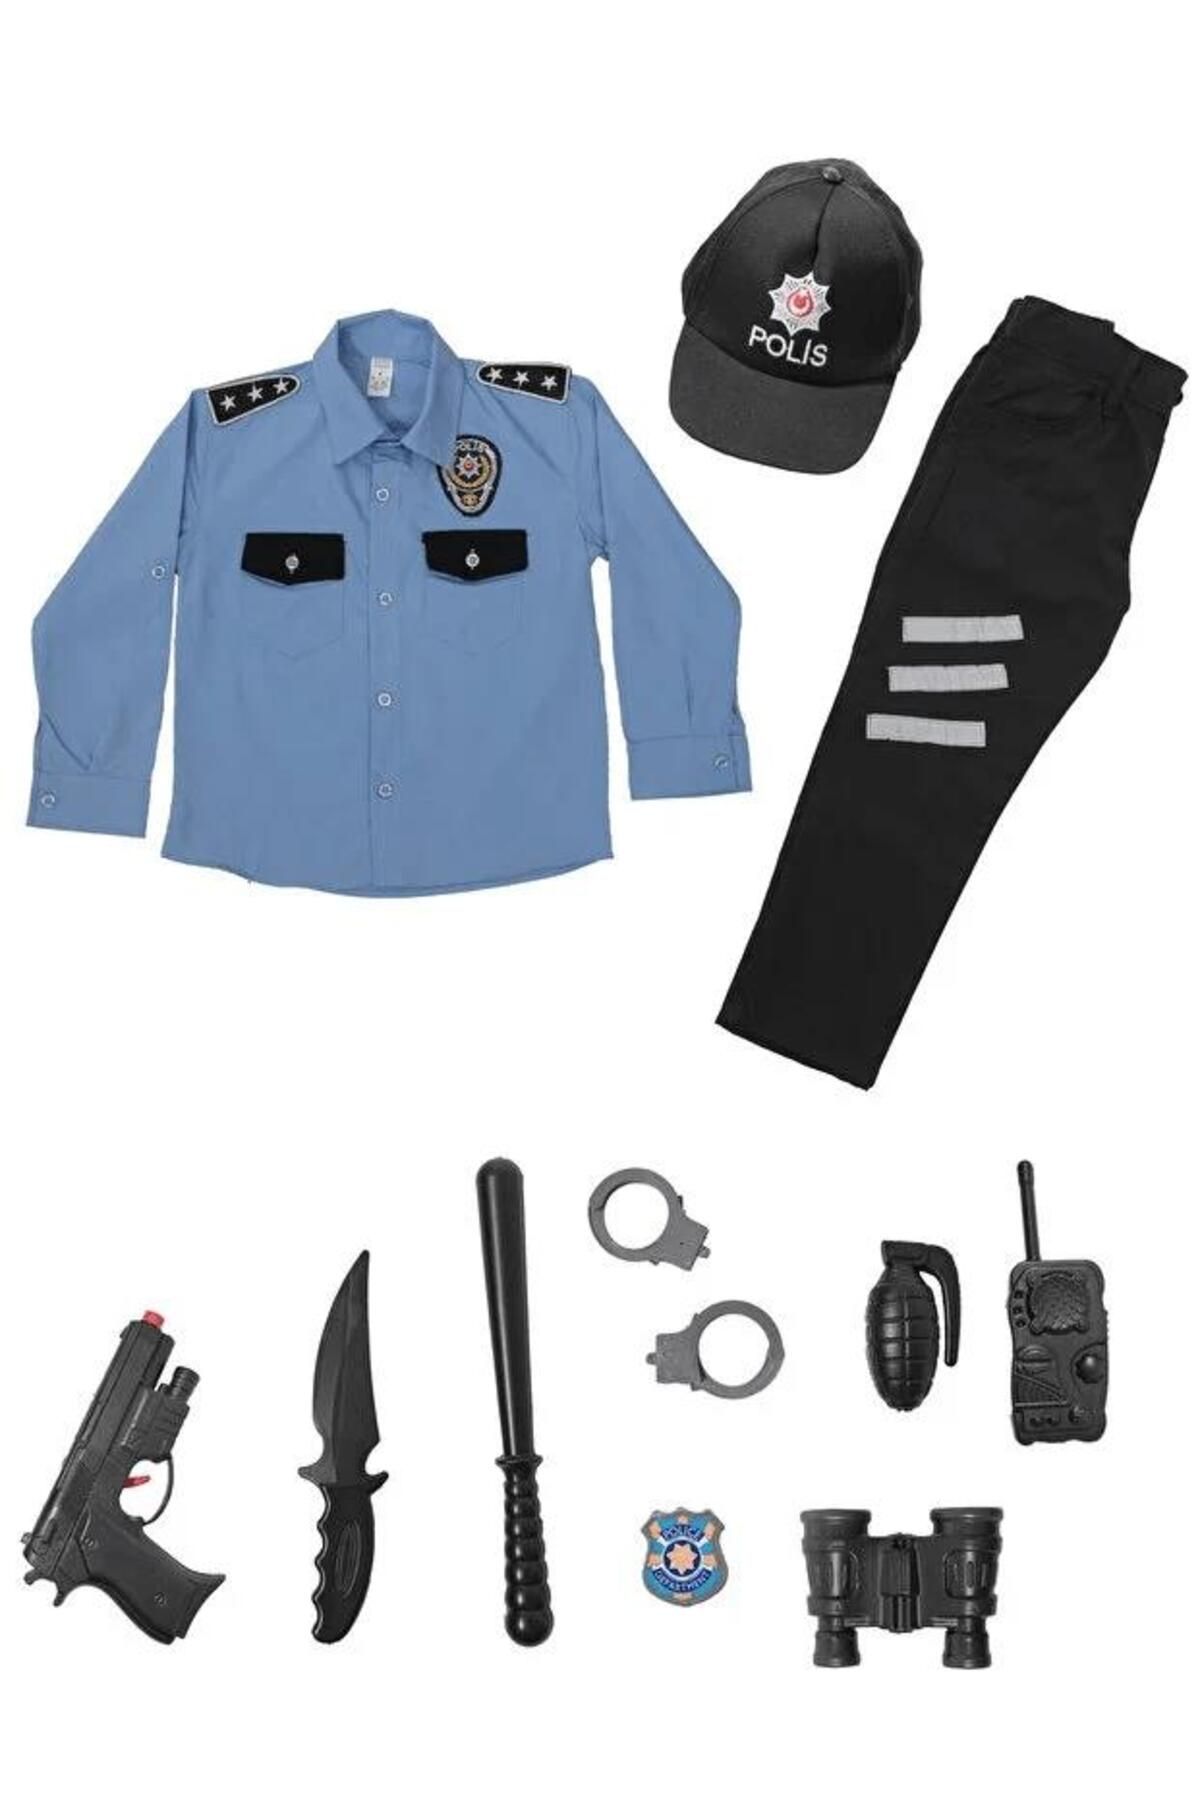 Mashotrend Polis Kostümü Alt Üst Gömlek + Şapka + Oyuncak Seti Çocuk Polis Kostümü - Çocuk Polis Kıyafeti